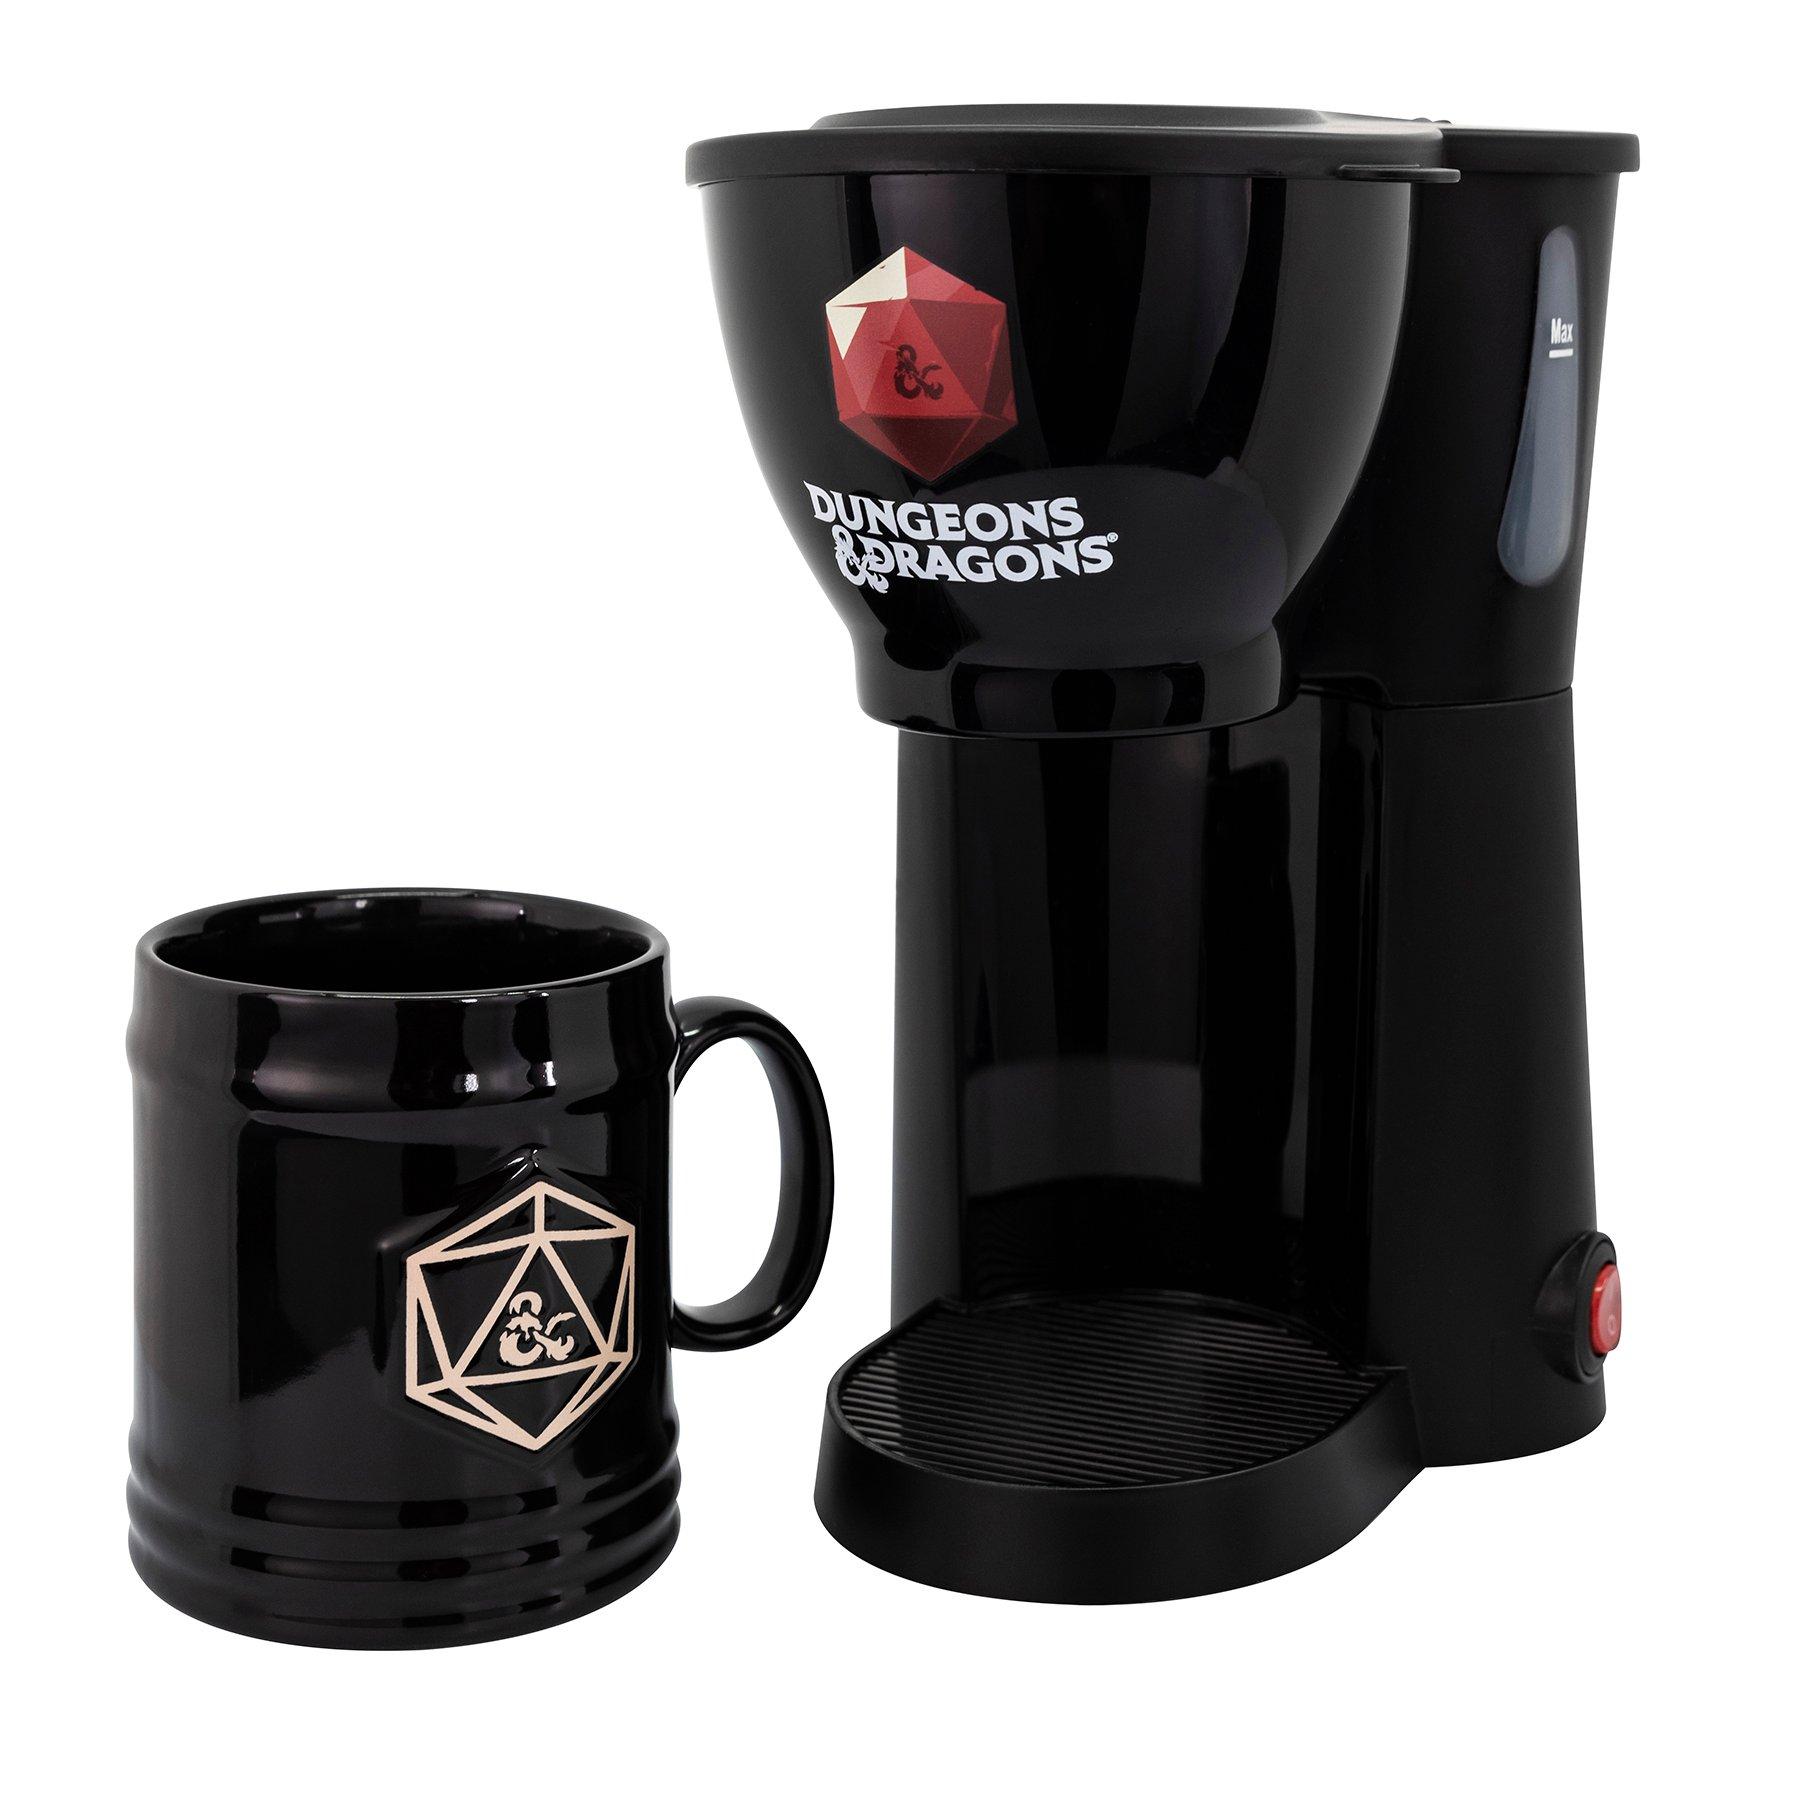 https://media.gamestop.com/i/gamestop/11168014_ALT01/Dungeons-and-Dragons-Coffee-Maker-With-Mug?$pdp$